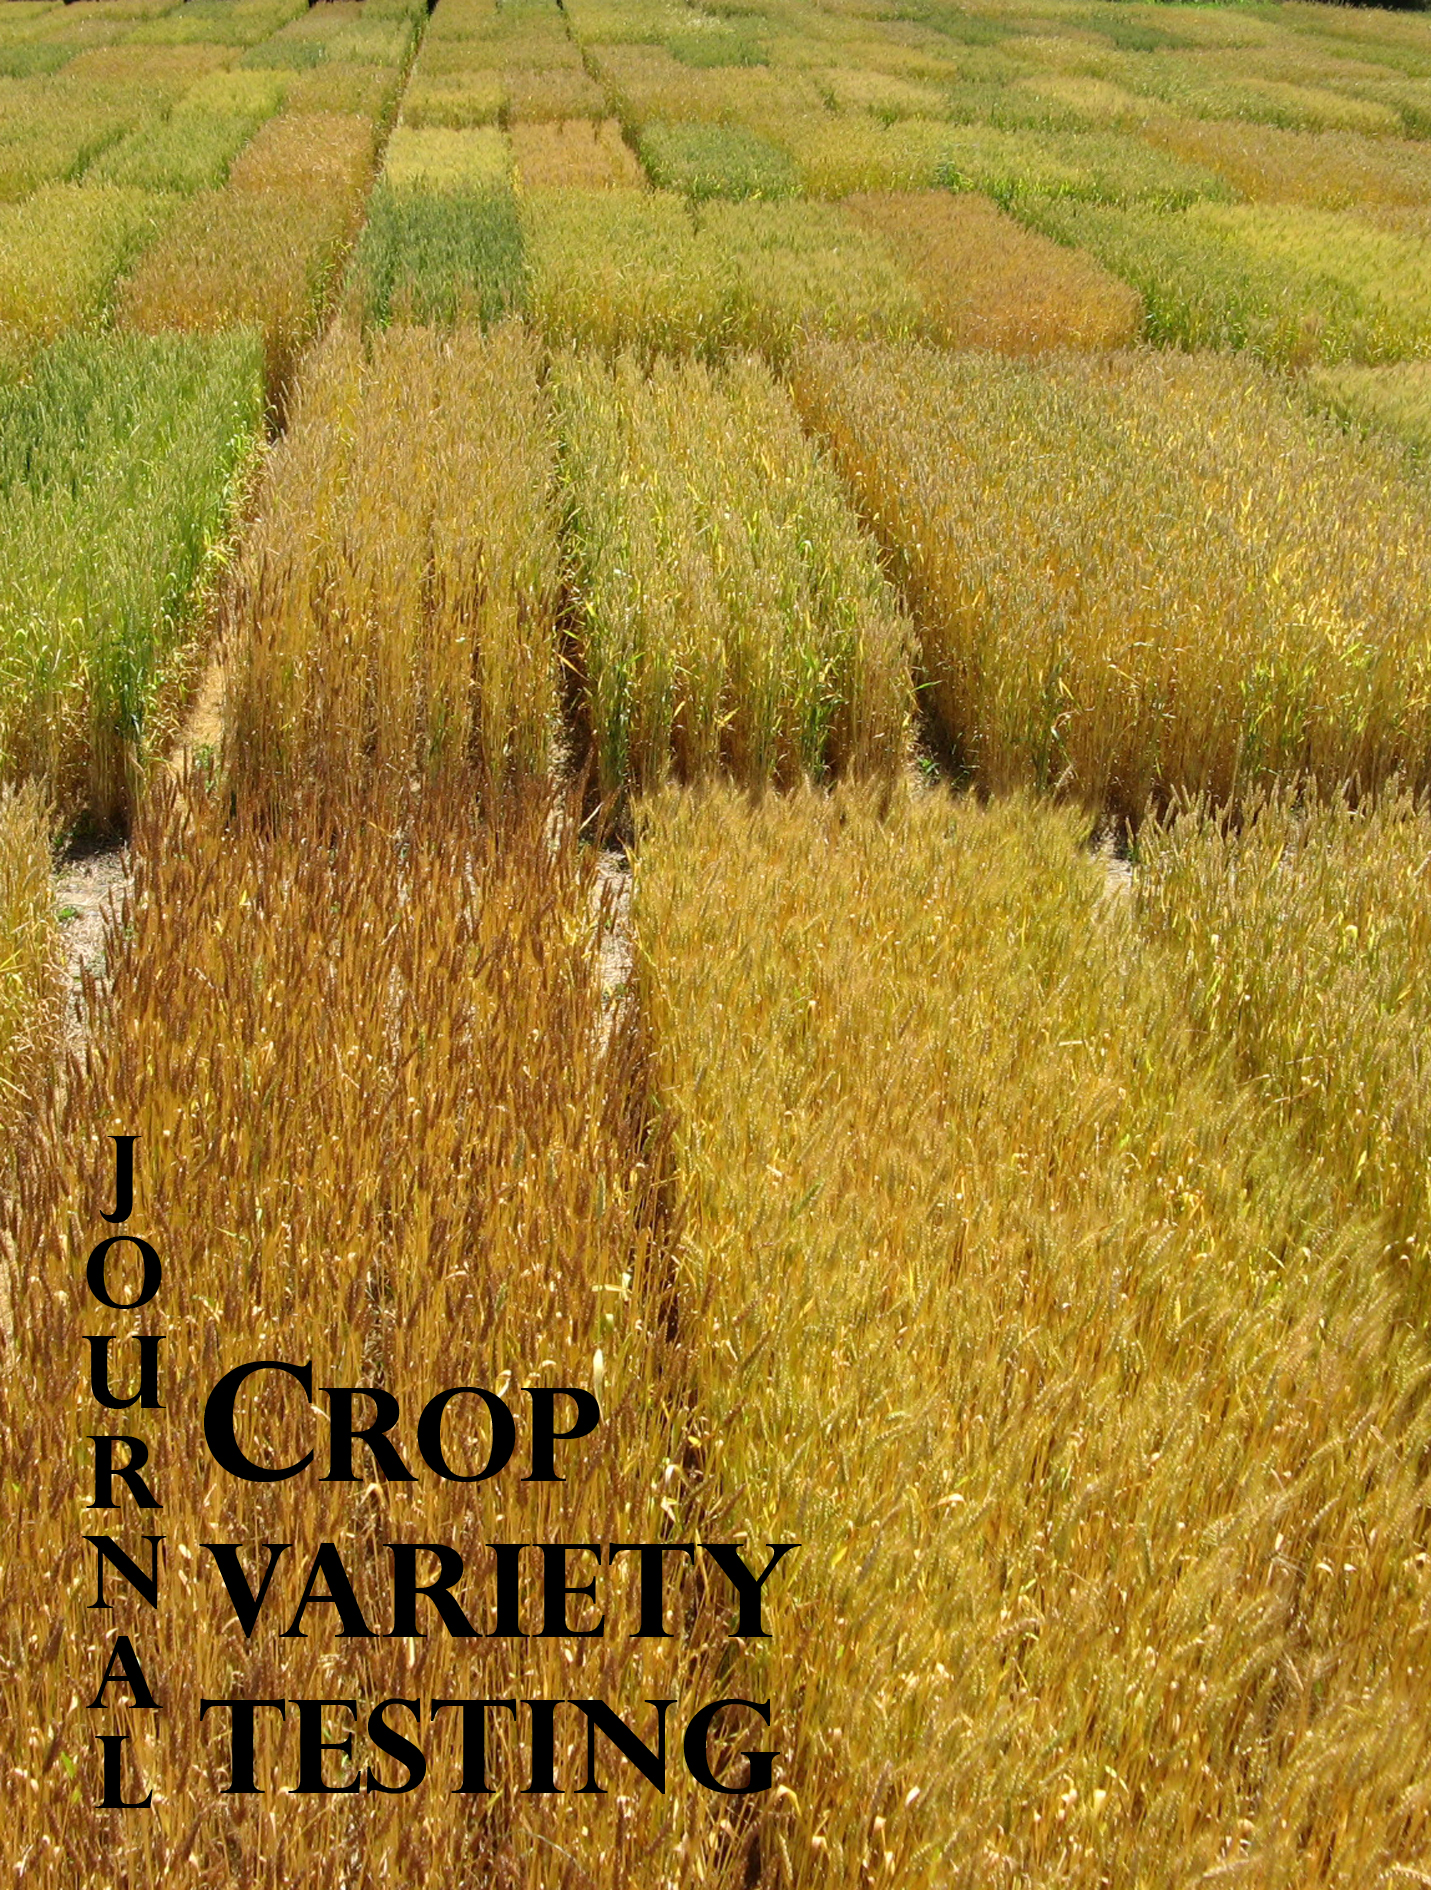 Journal of Crop Variety Teseting